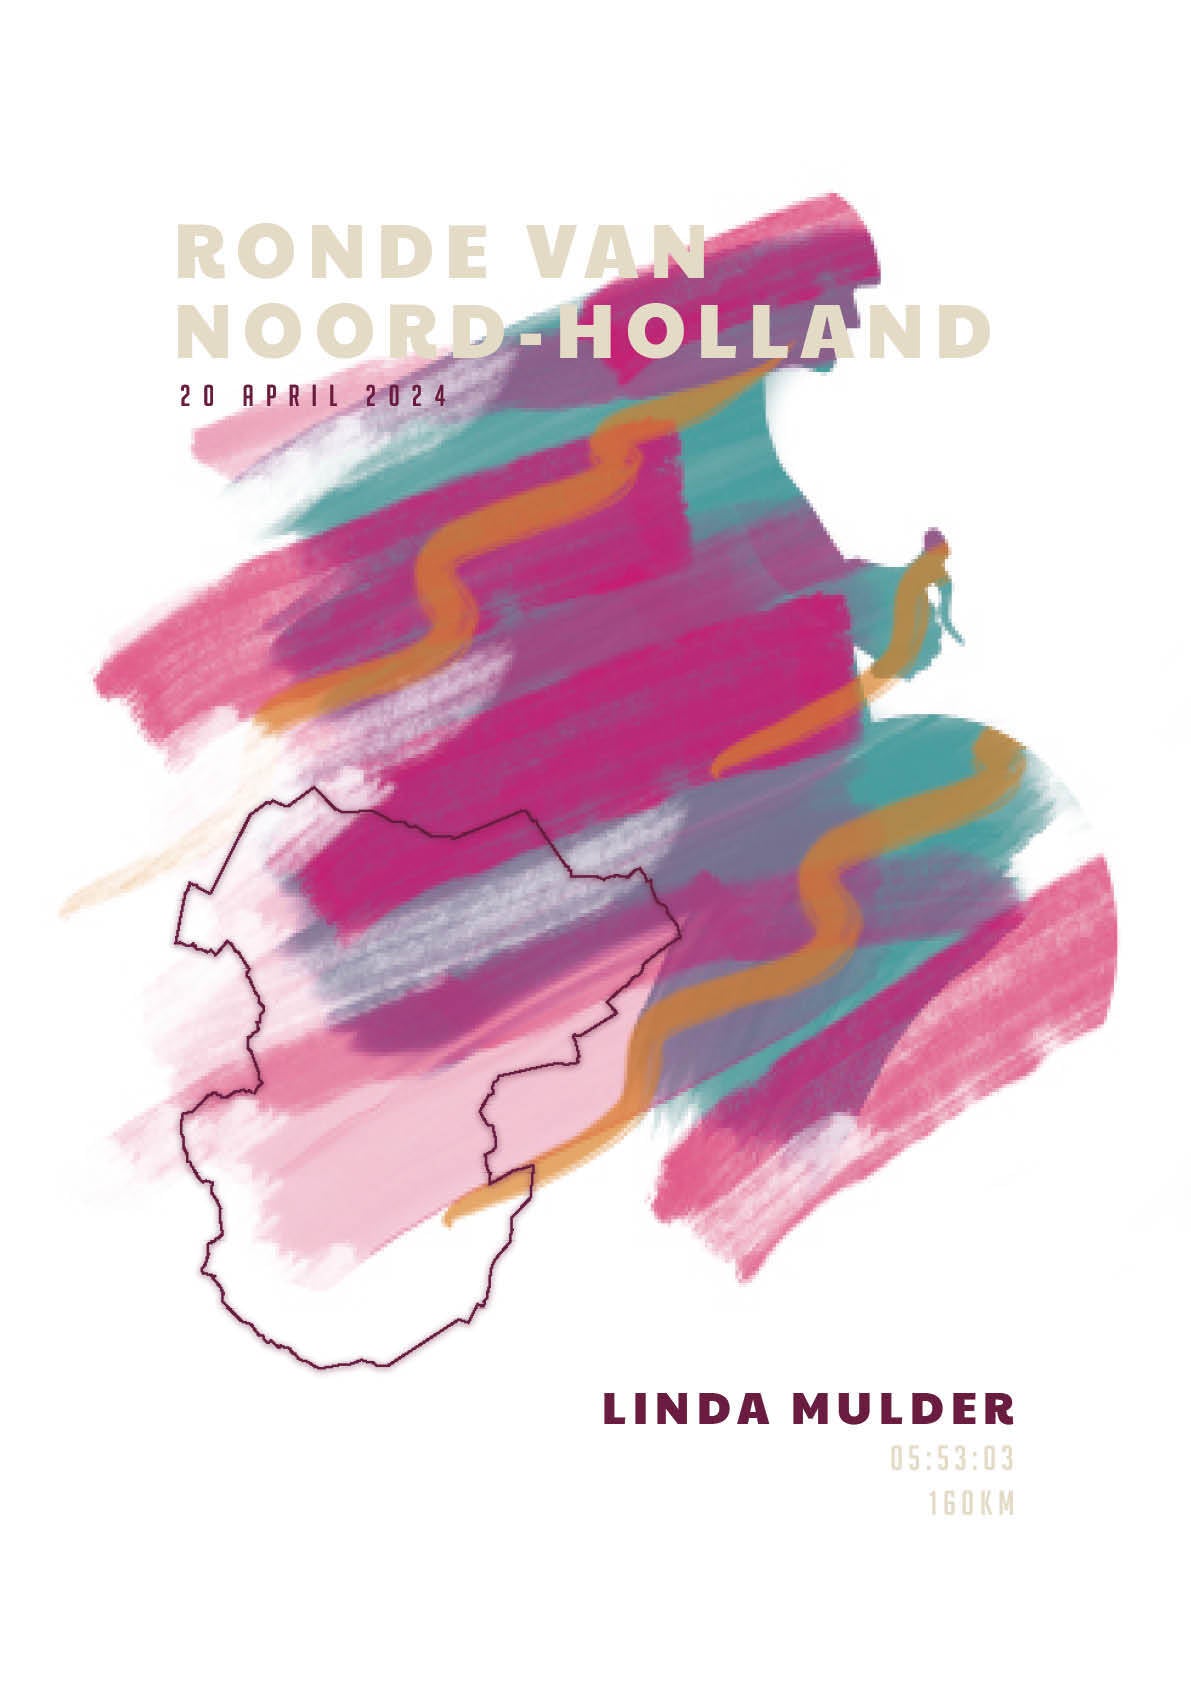 Ronde van Noord-Holland - Sportive Art - Poster